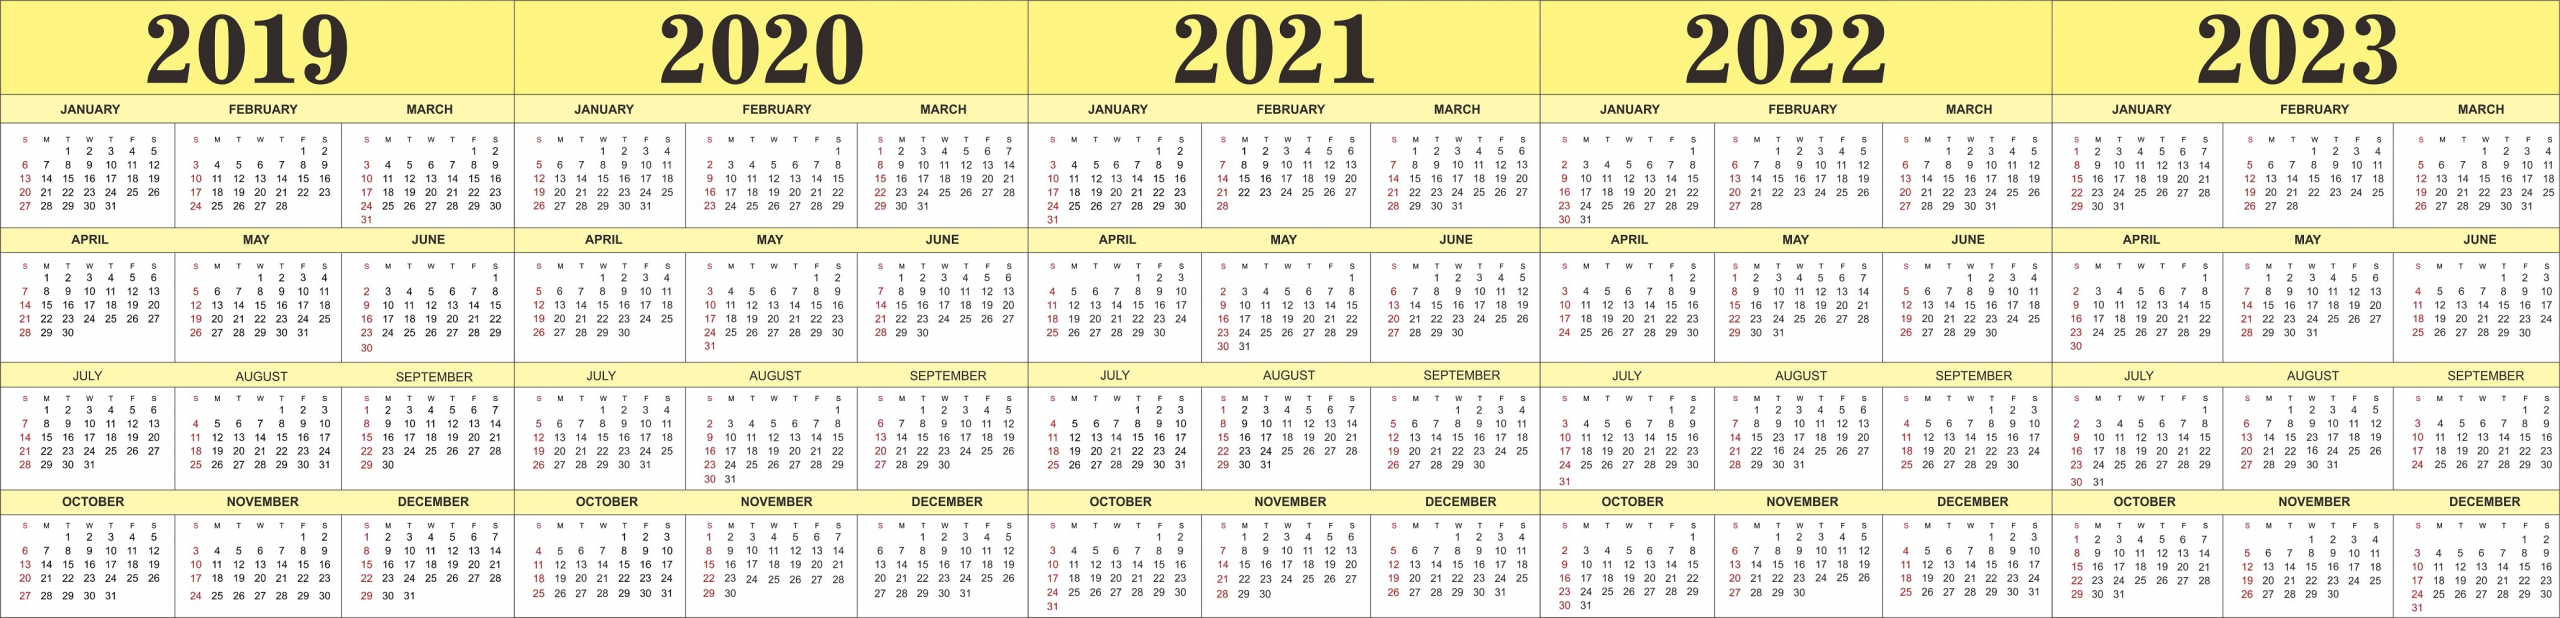 5 Year Calendar Uncc | Ten Free Printable Calendar 2020-2021 5 Year Planner Calendar